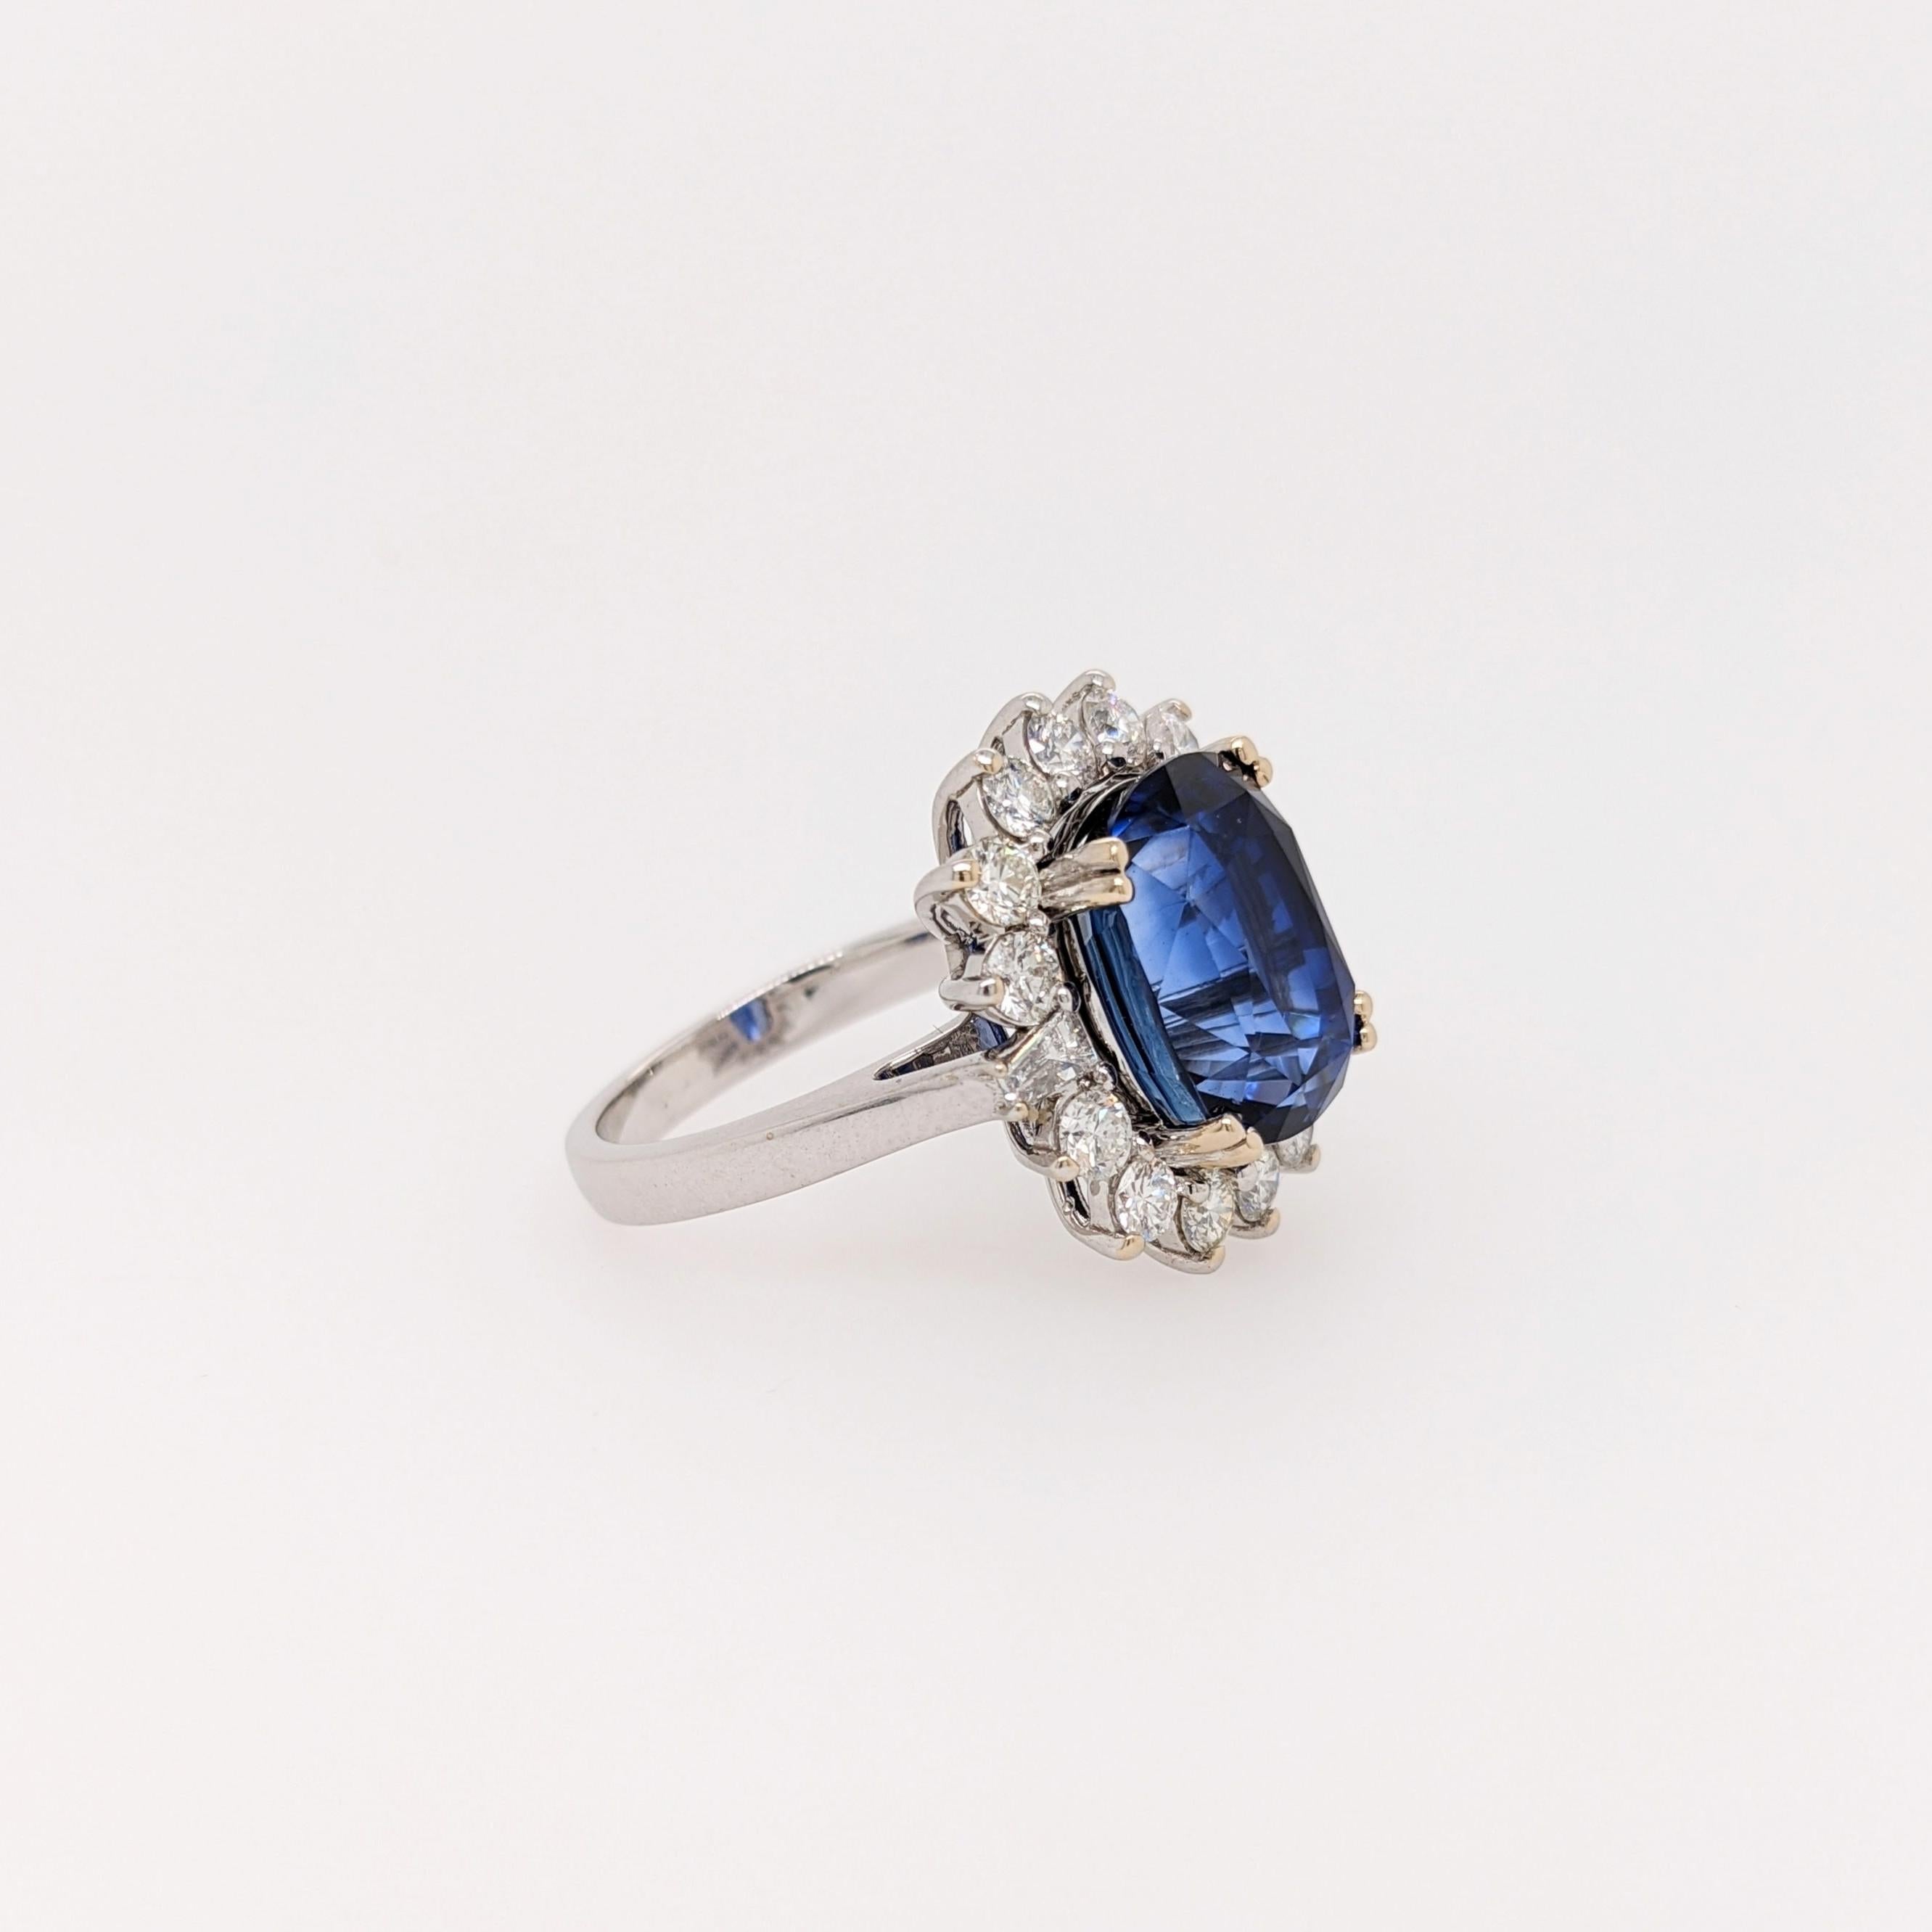 Stone: Royal Blue Sapphire
Origin: Ceylon (Sri Lanka)
Treatment: Heated
Hardness: 9
Clarity: Eye clean
Shape: Cushion
Cut: Faceted
Size: 12x10mm
Weight: 9.00cts
Metal: 18k/7.39gms

Diamonds V/S1 G: 16/1.19cts
Certificate: GRS / 113538

Sku: